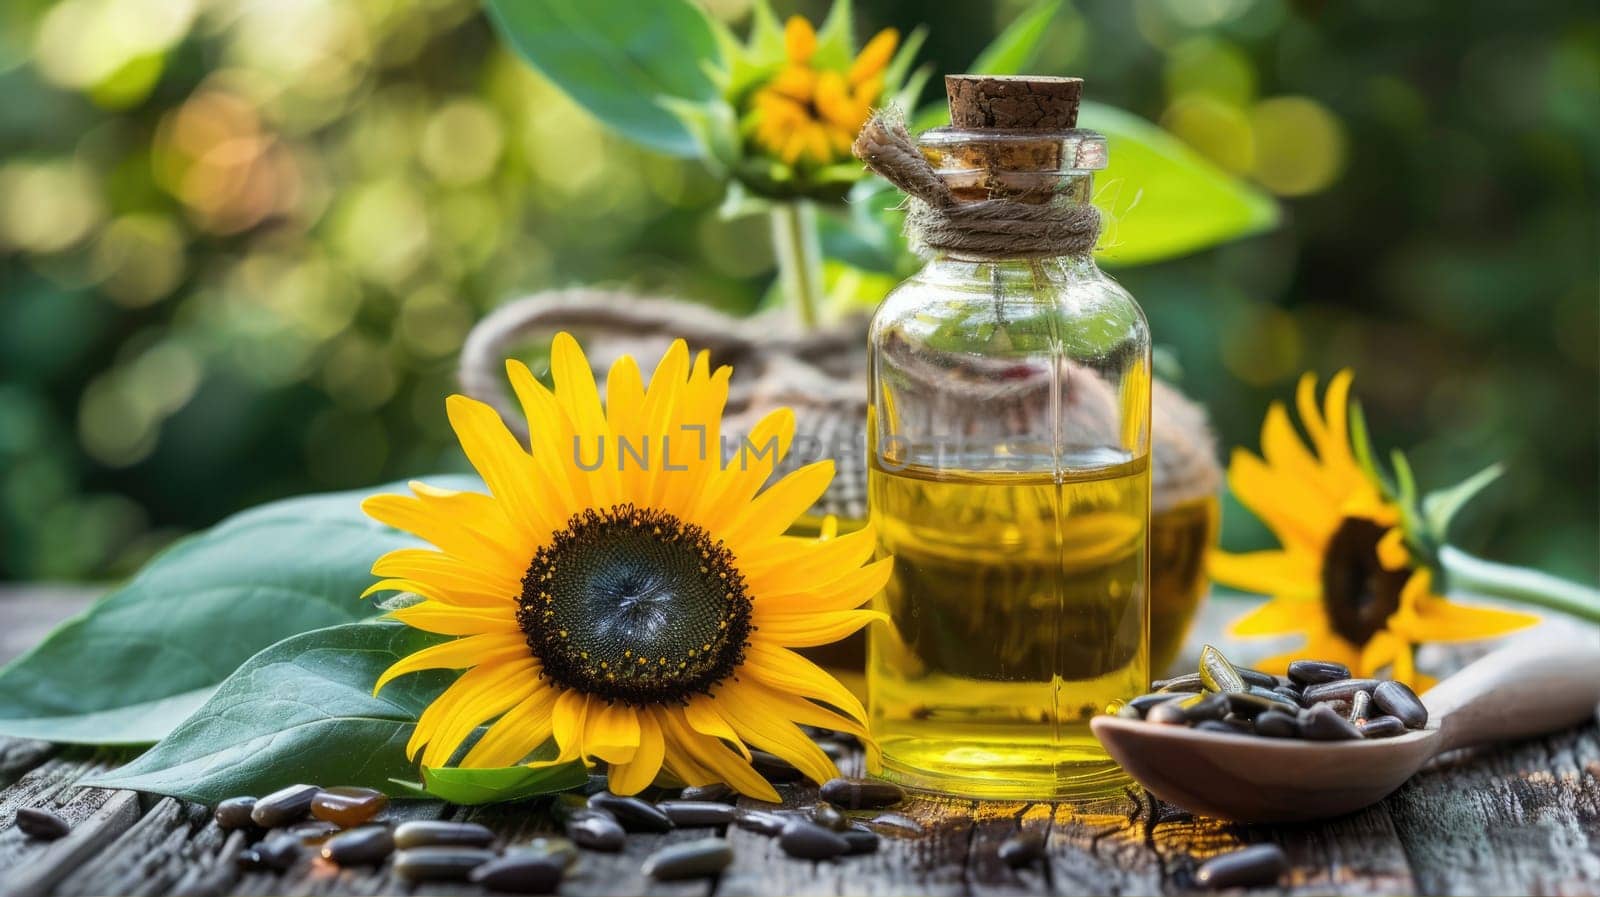 Organic sunflower oil in a small glass jar. Sun flower oil by natali_brill